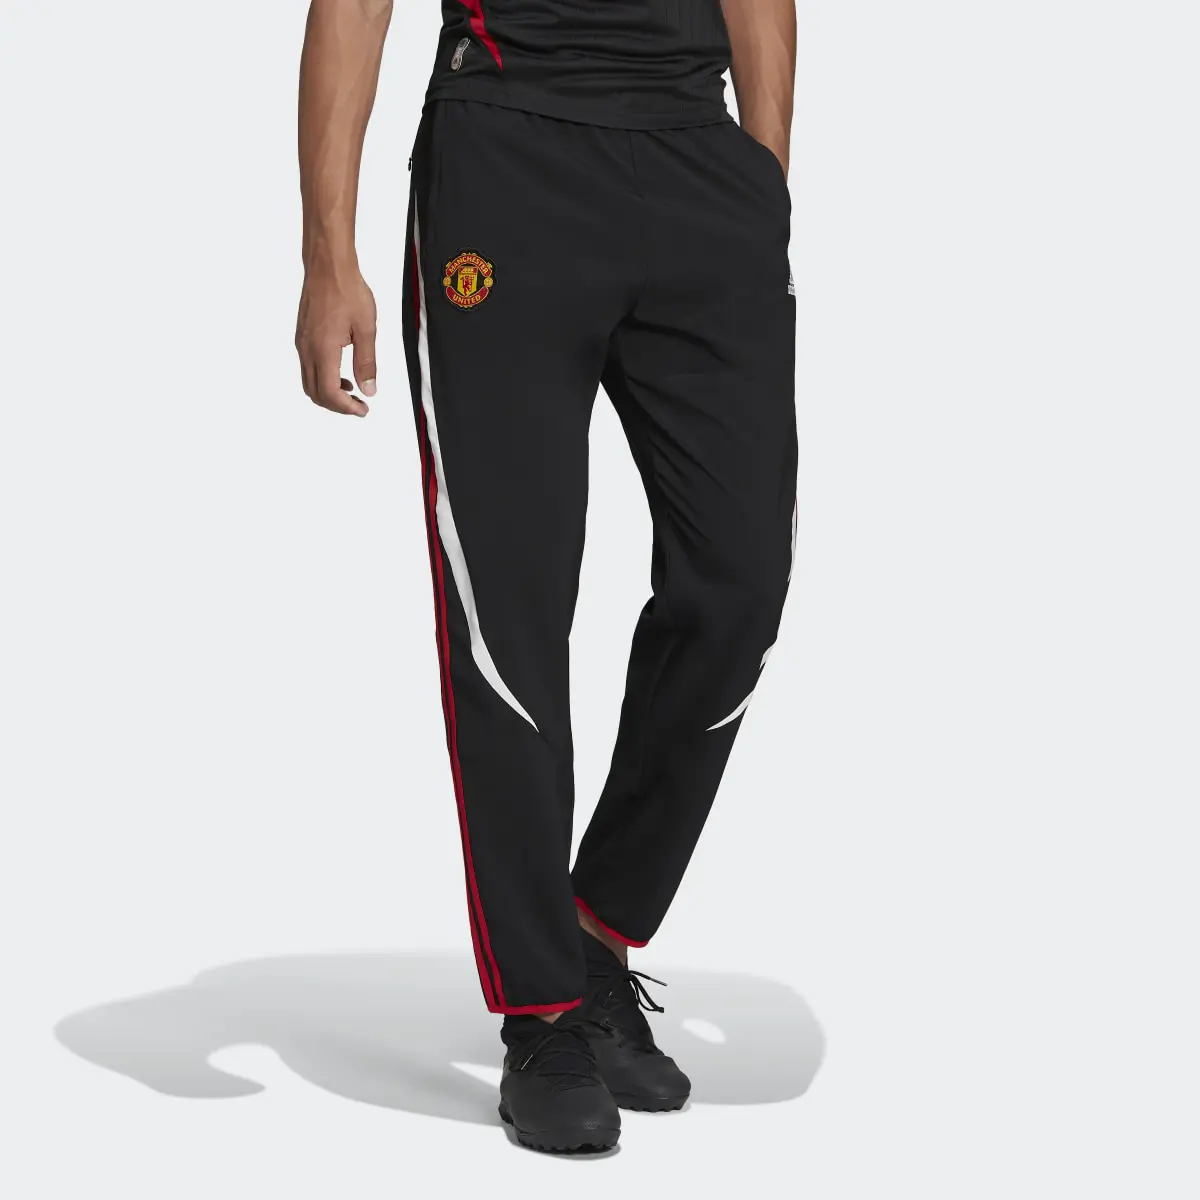 Adidas Calças Teamgeist do Manchester United. 1